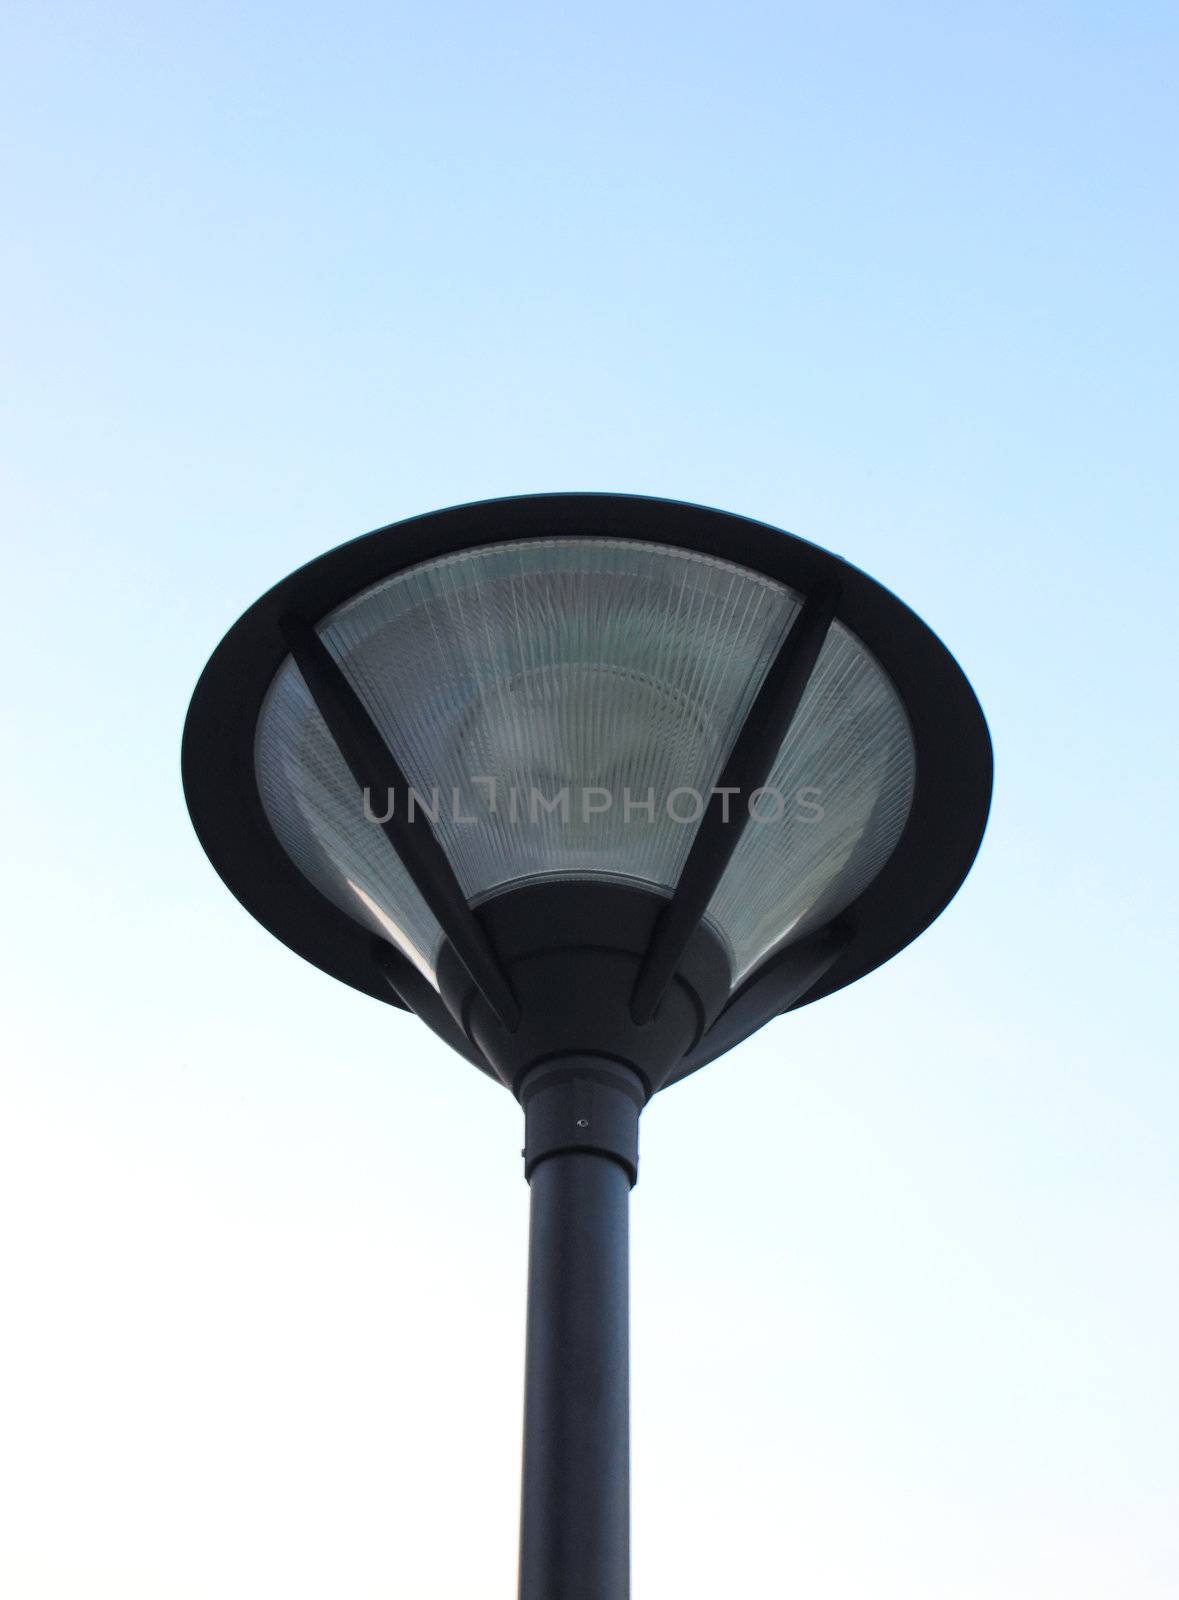 street light on blue sky  by nuchylee